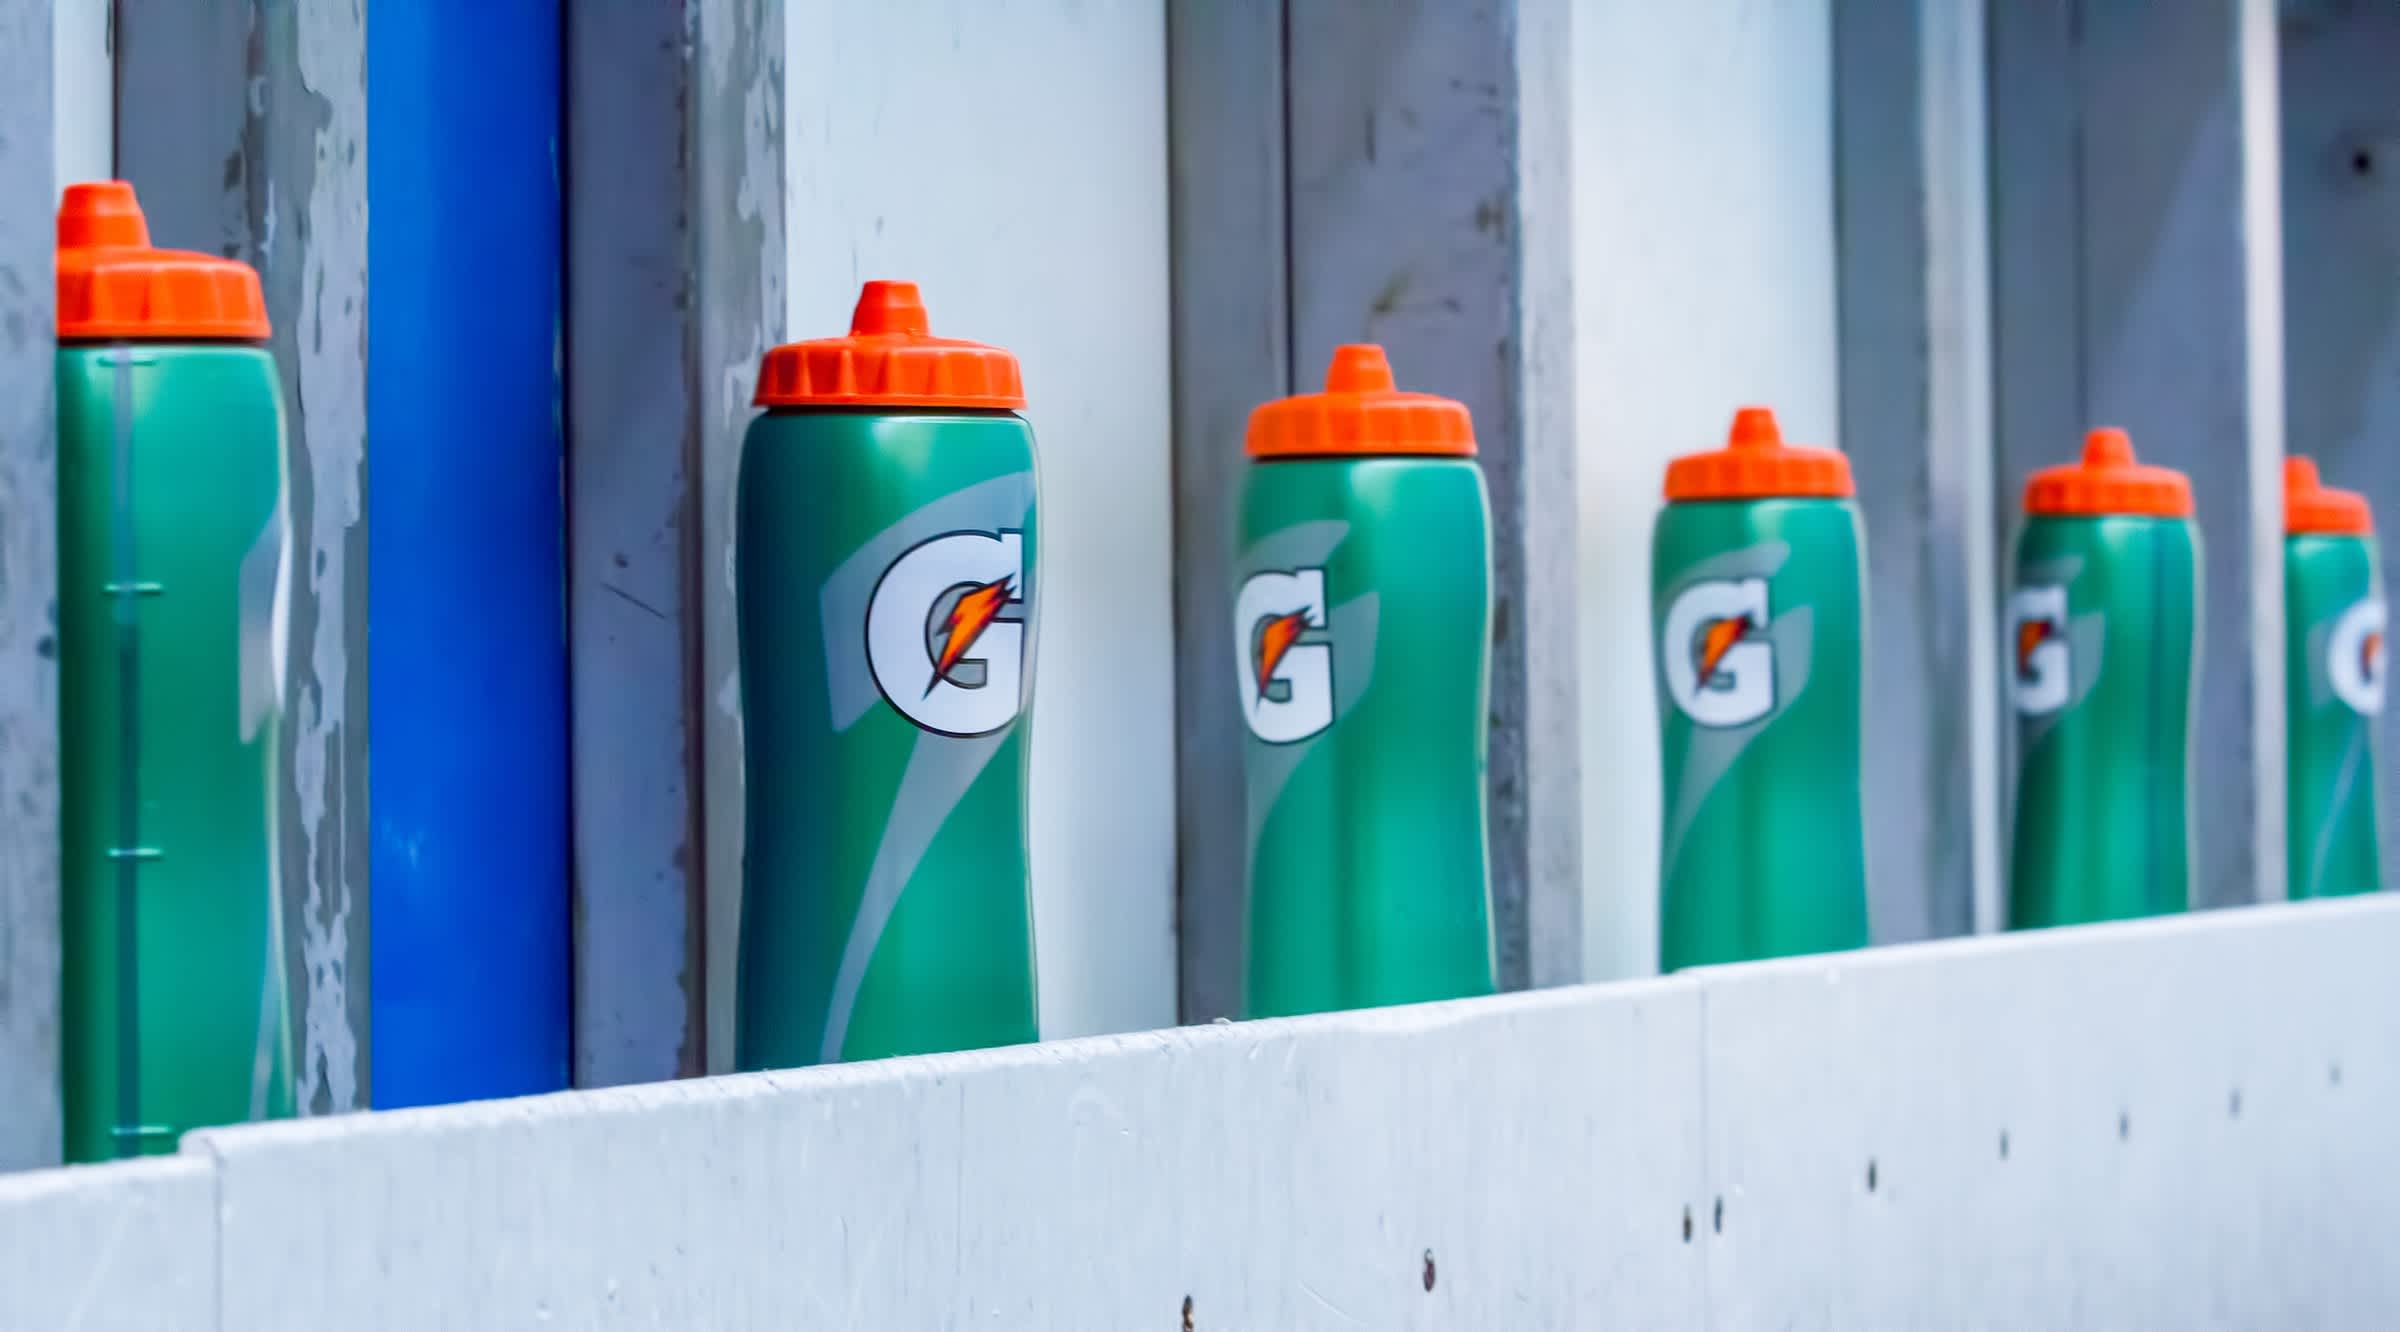 Bottles with the Gatorade logo